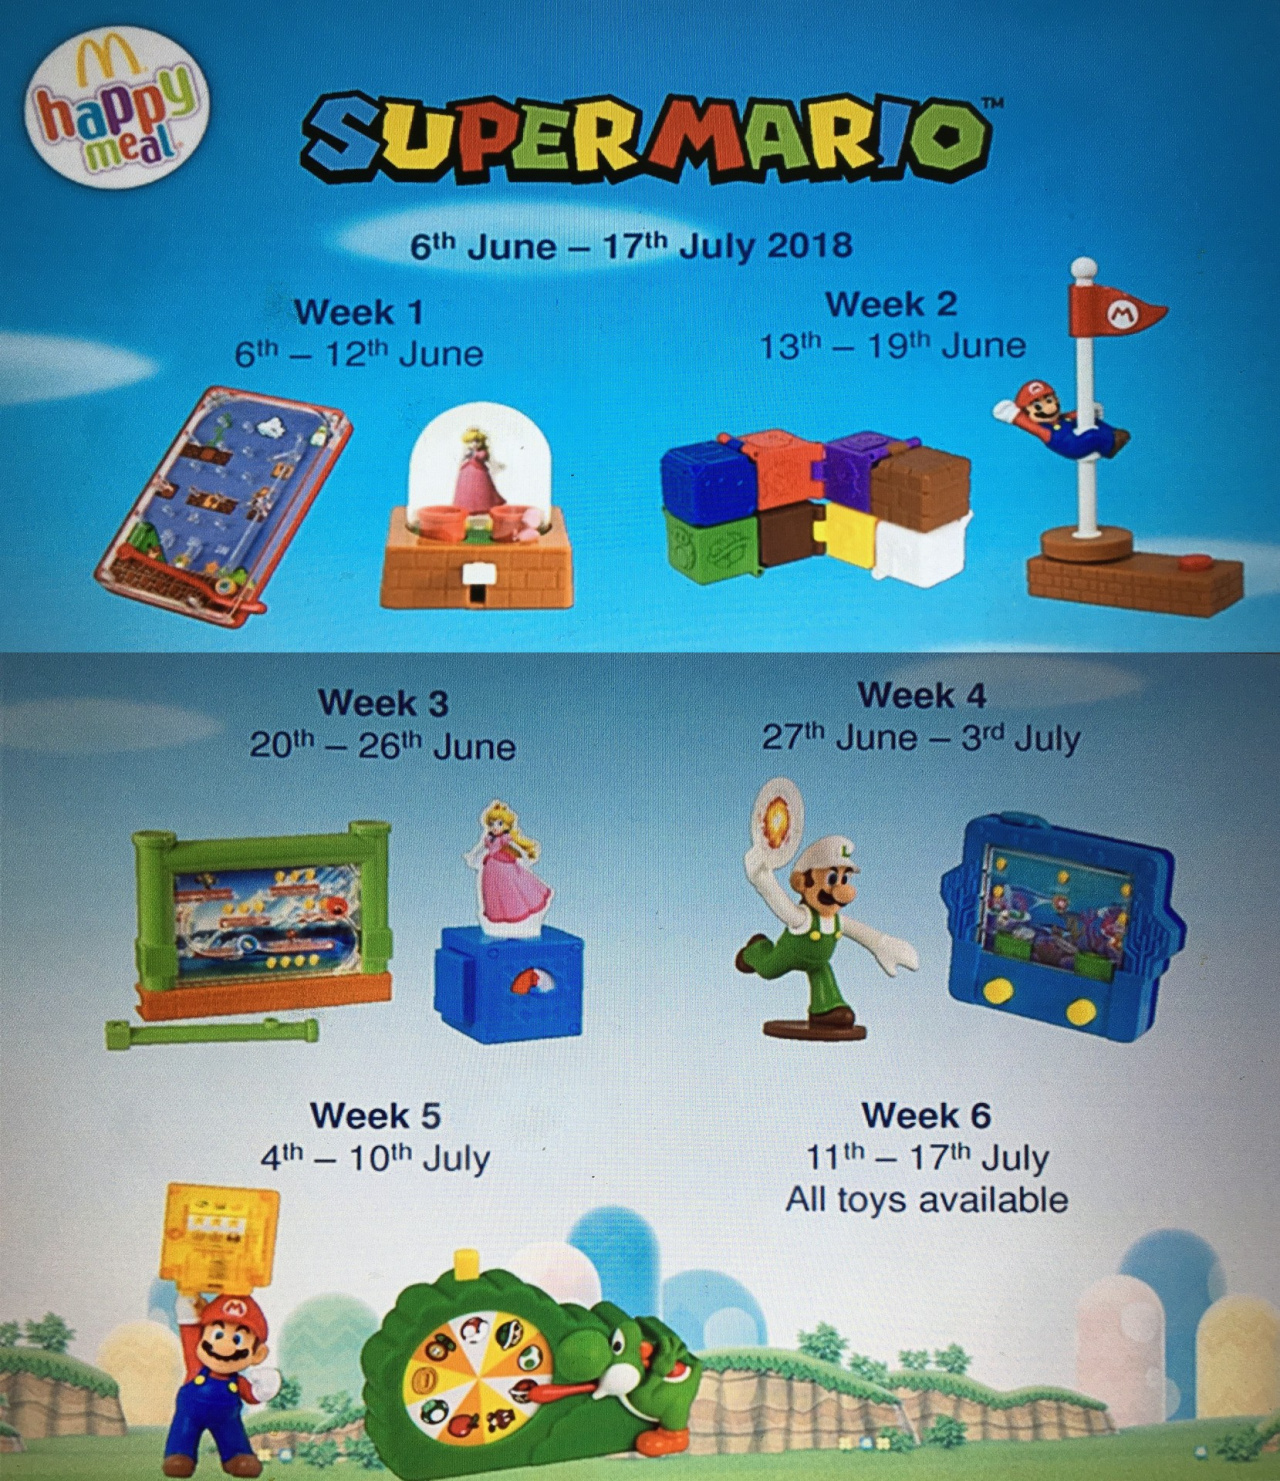 Super Mario Happy Meal Toys Coming